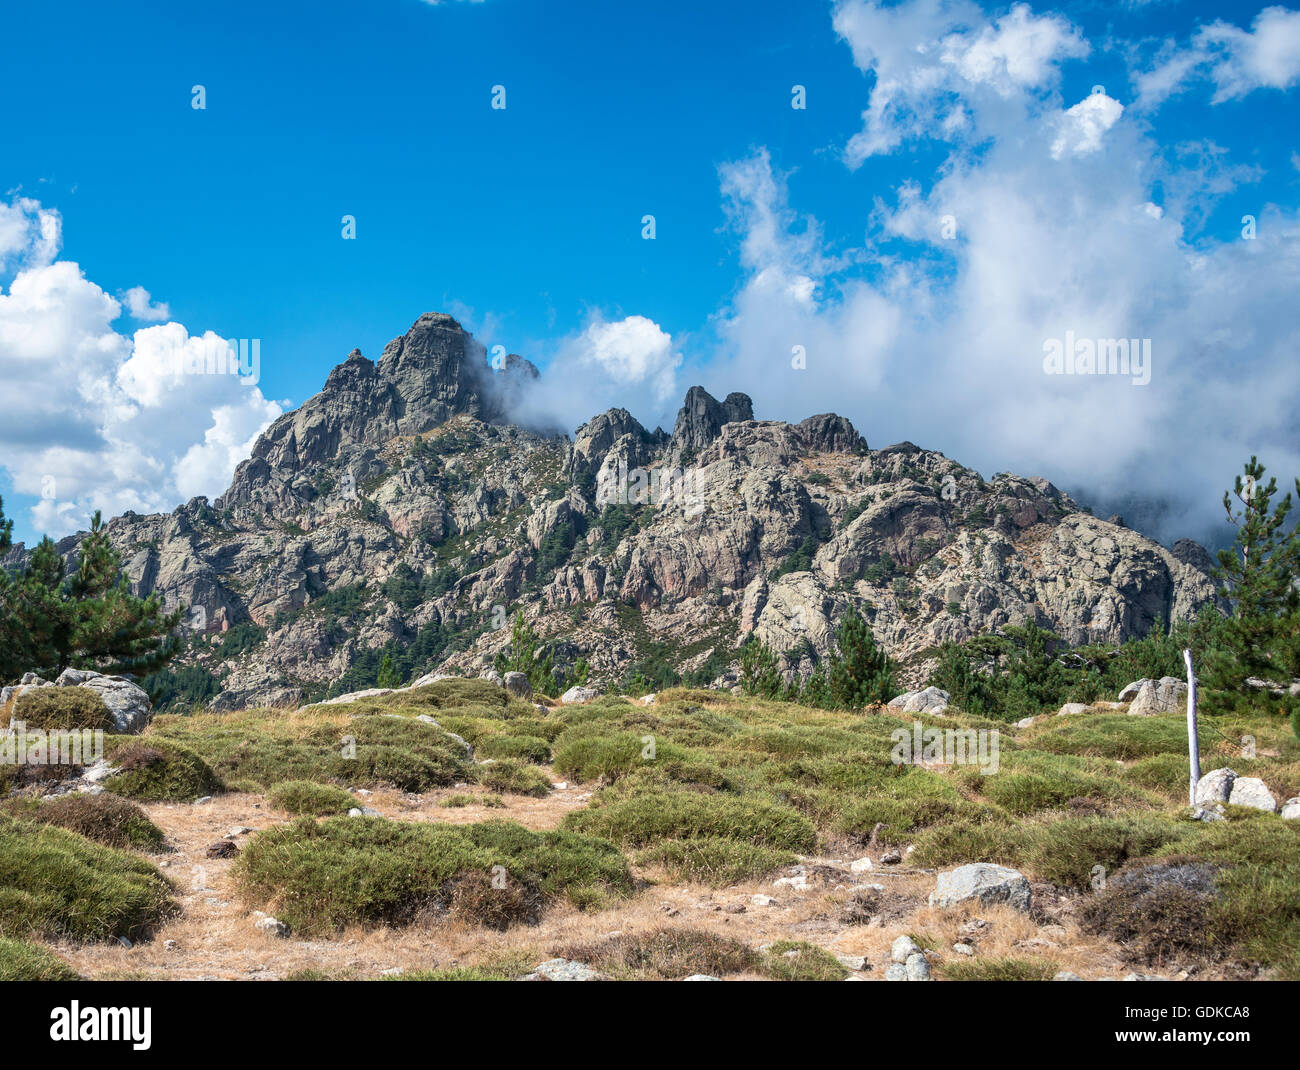 Les falaises accidentées, Col de Bavella, massif de Bavella, Corse, France Banque D'Images